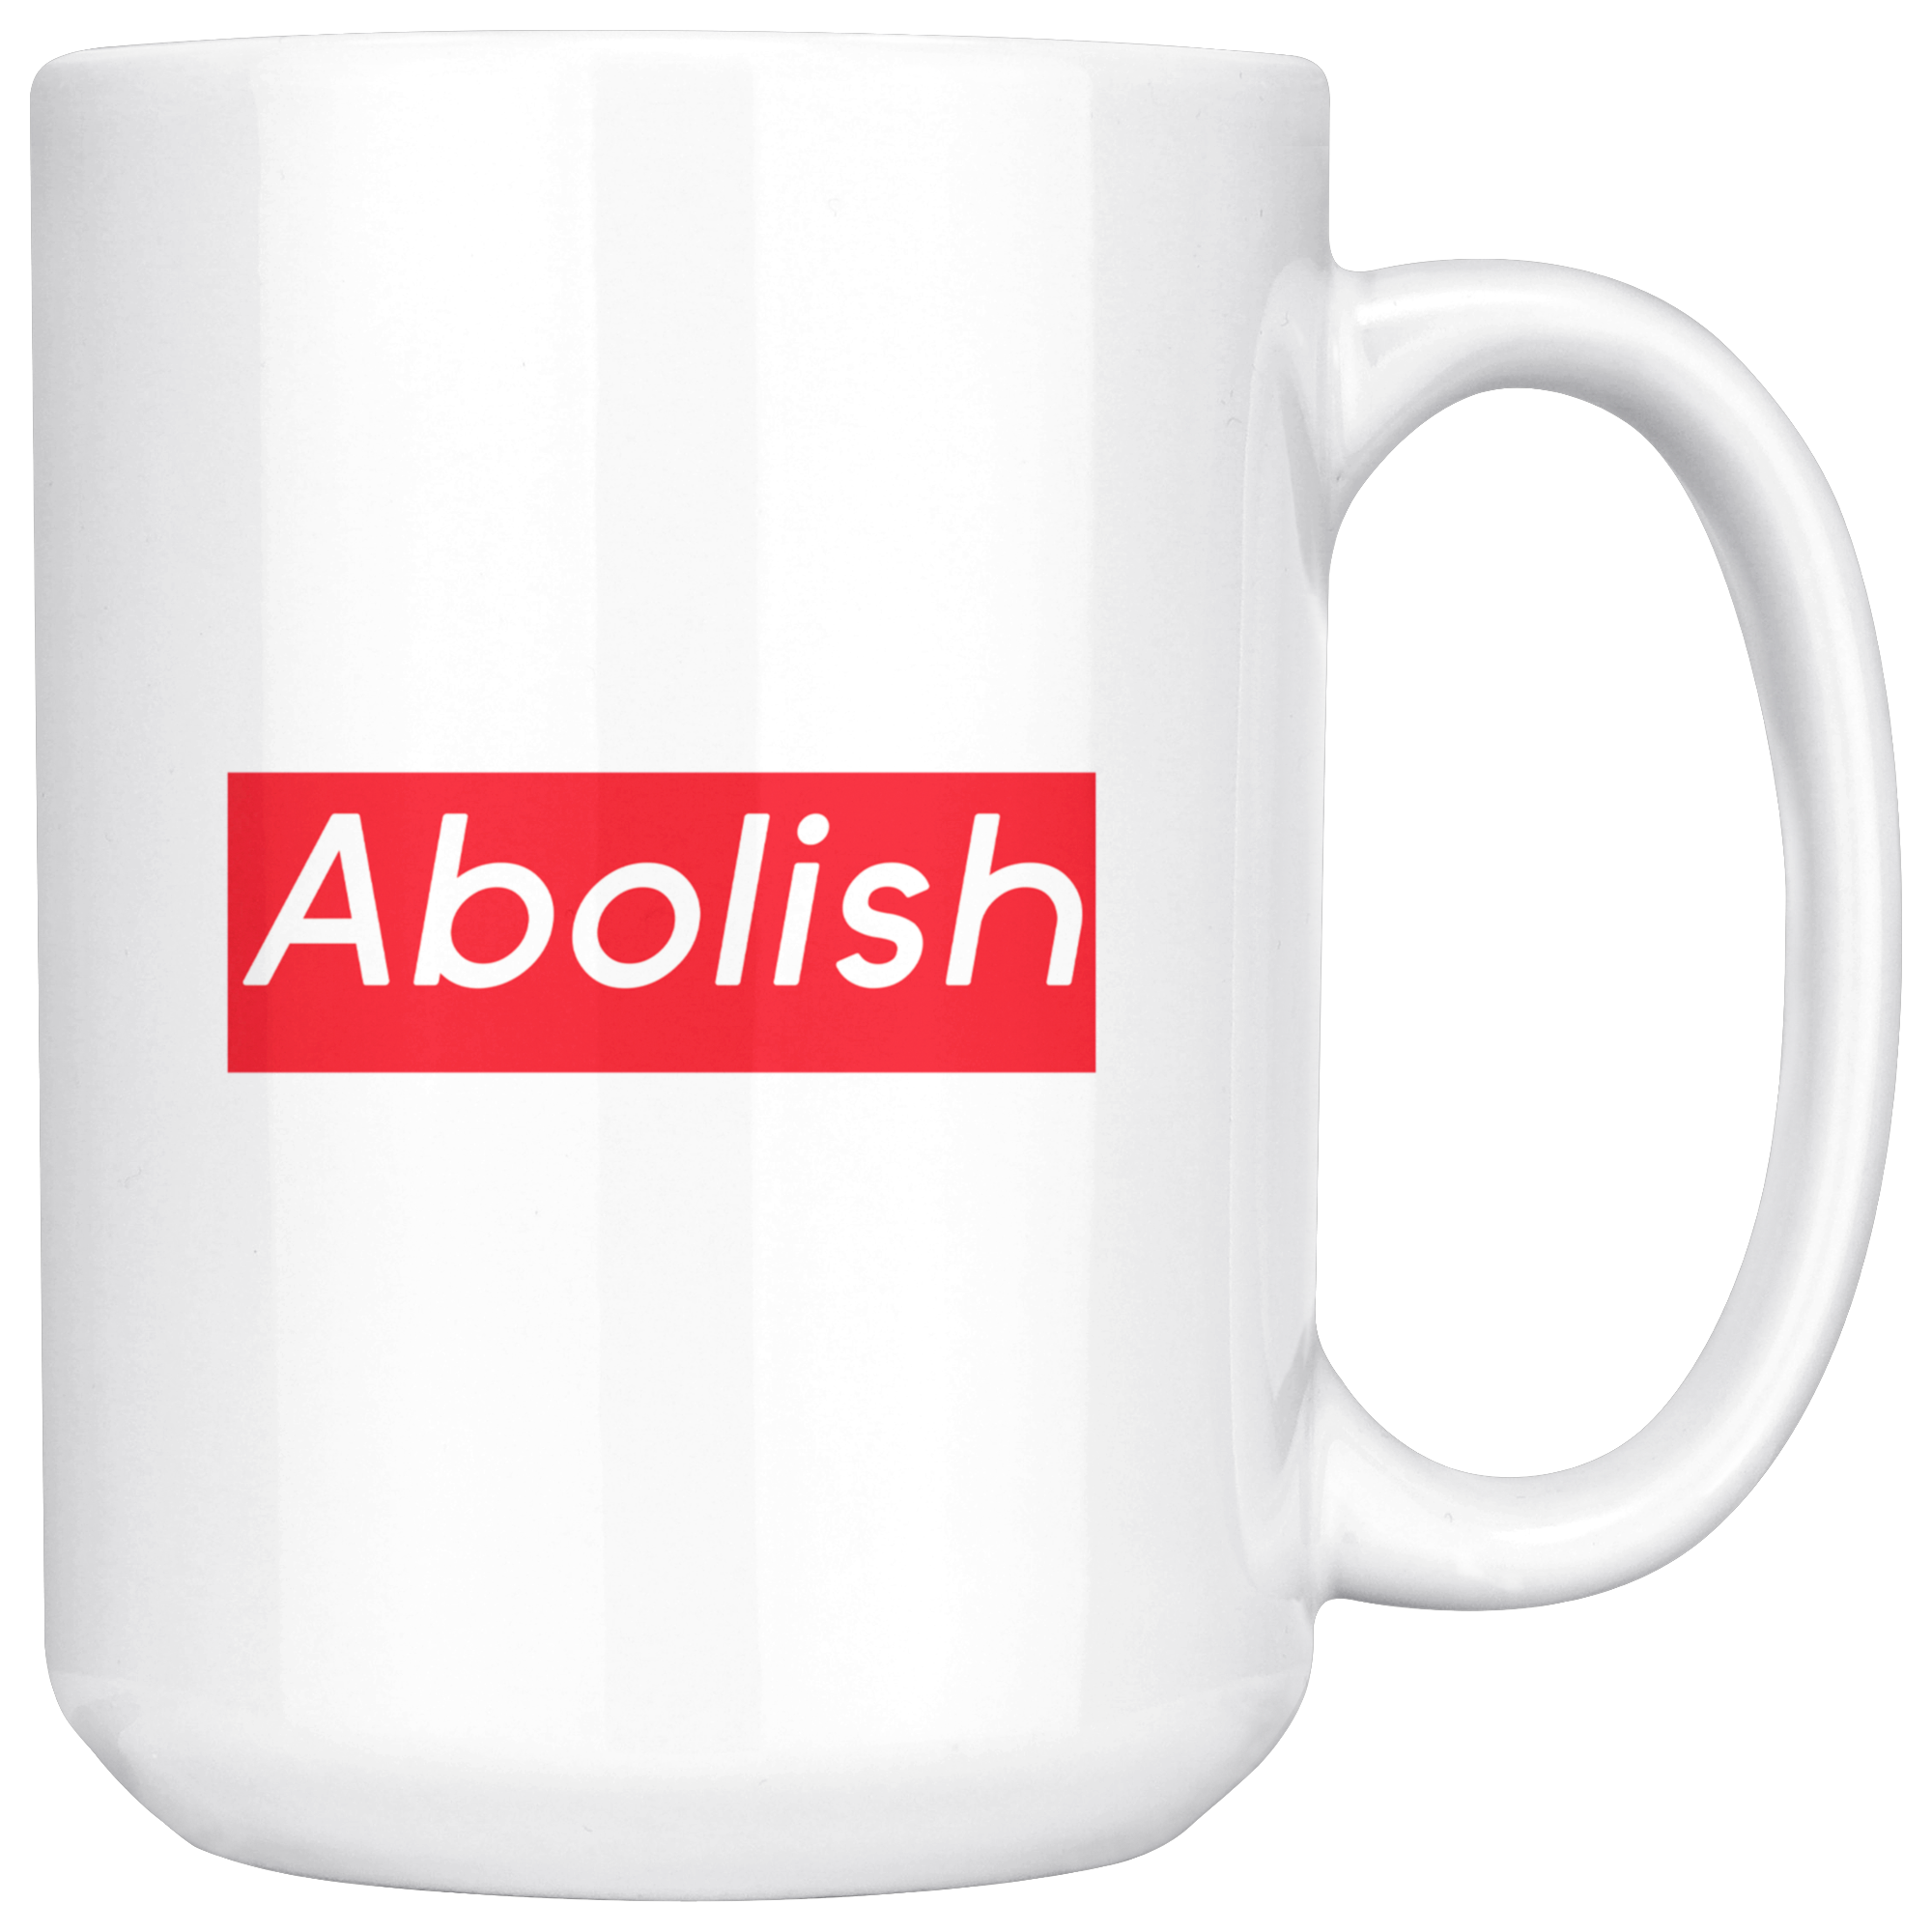 Abolish (Supreme Parody) Mug Drinkware  - Gemmed Firefly